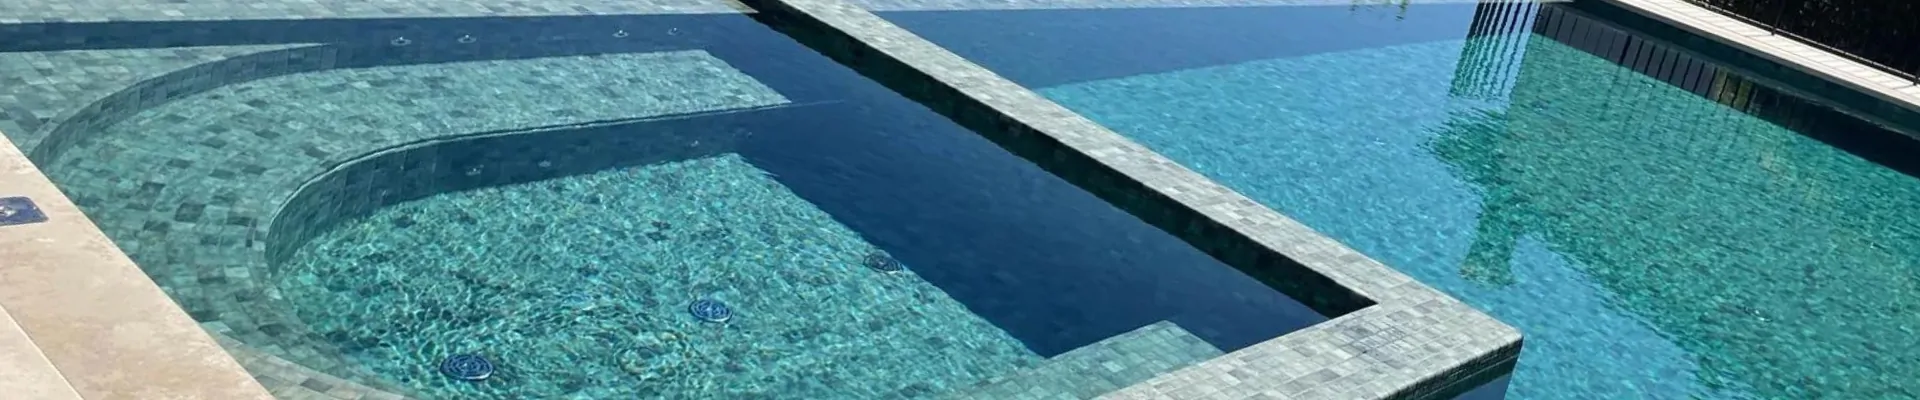 piscina con gresite de piedra natural